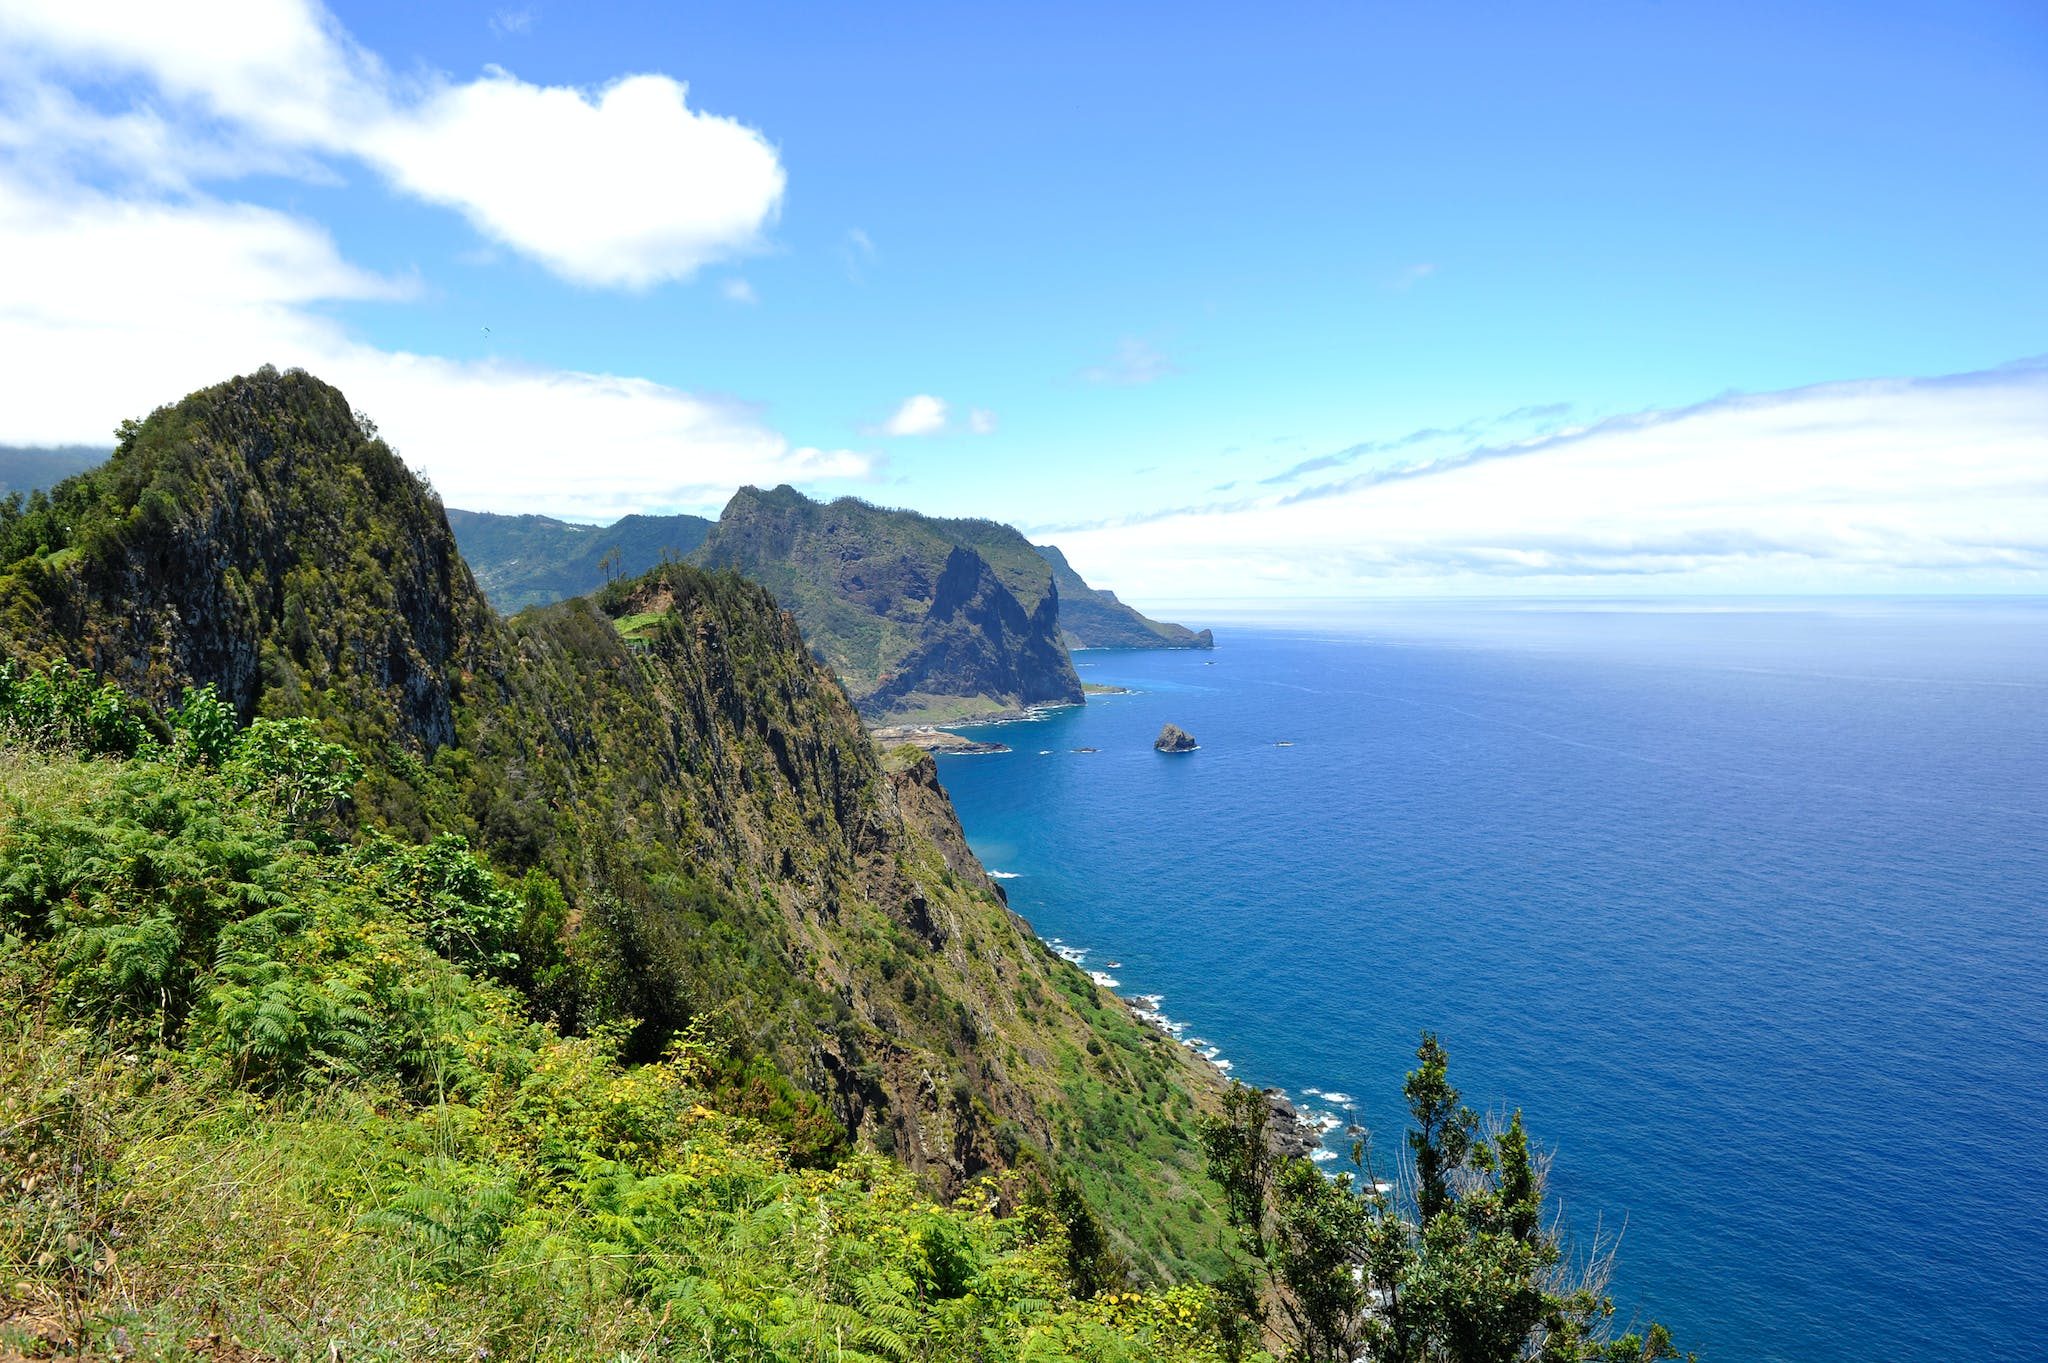 Madeira's rugged coastline.